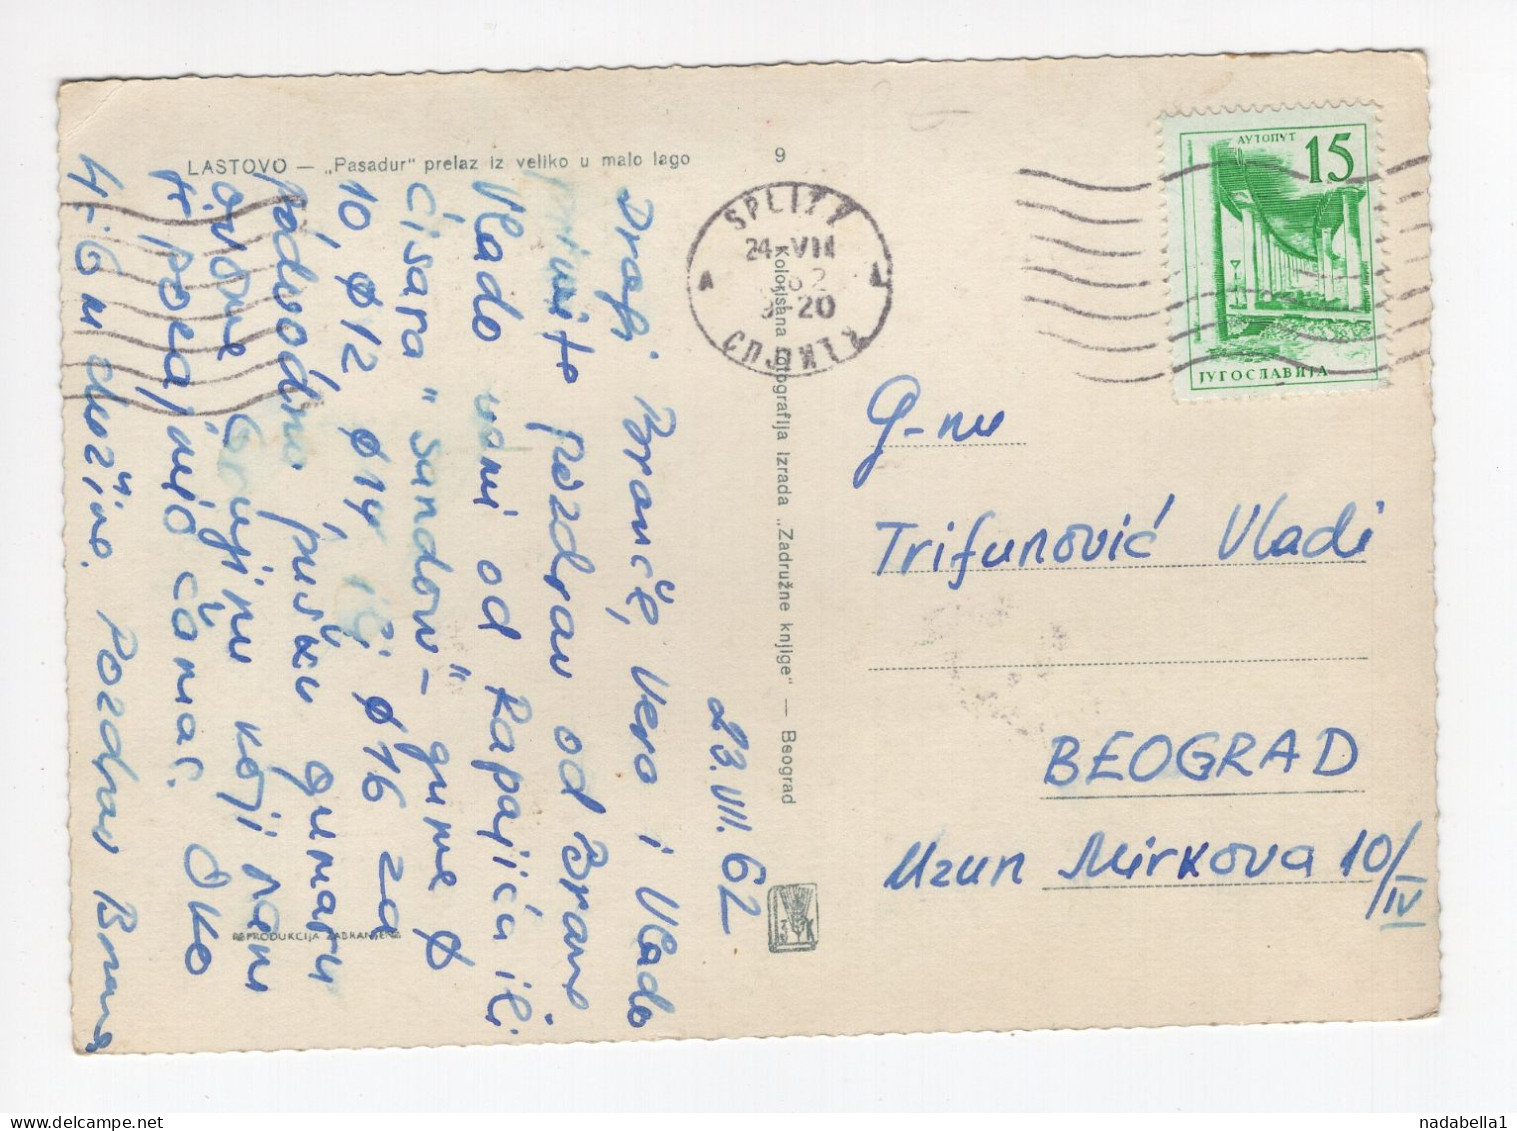 1962. YUGOSLAVIA,CROATIA,LASTOVO,PASADUR,POSTCARD,USED - Jugoslawien